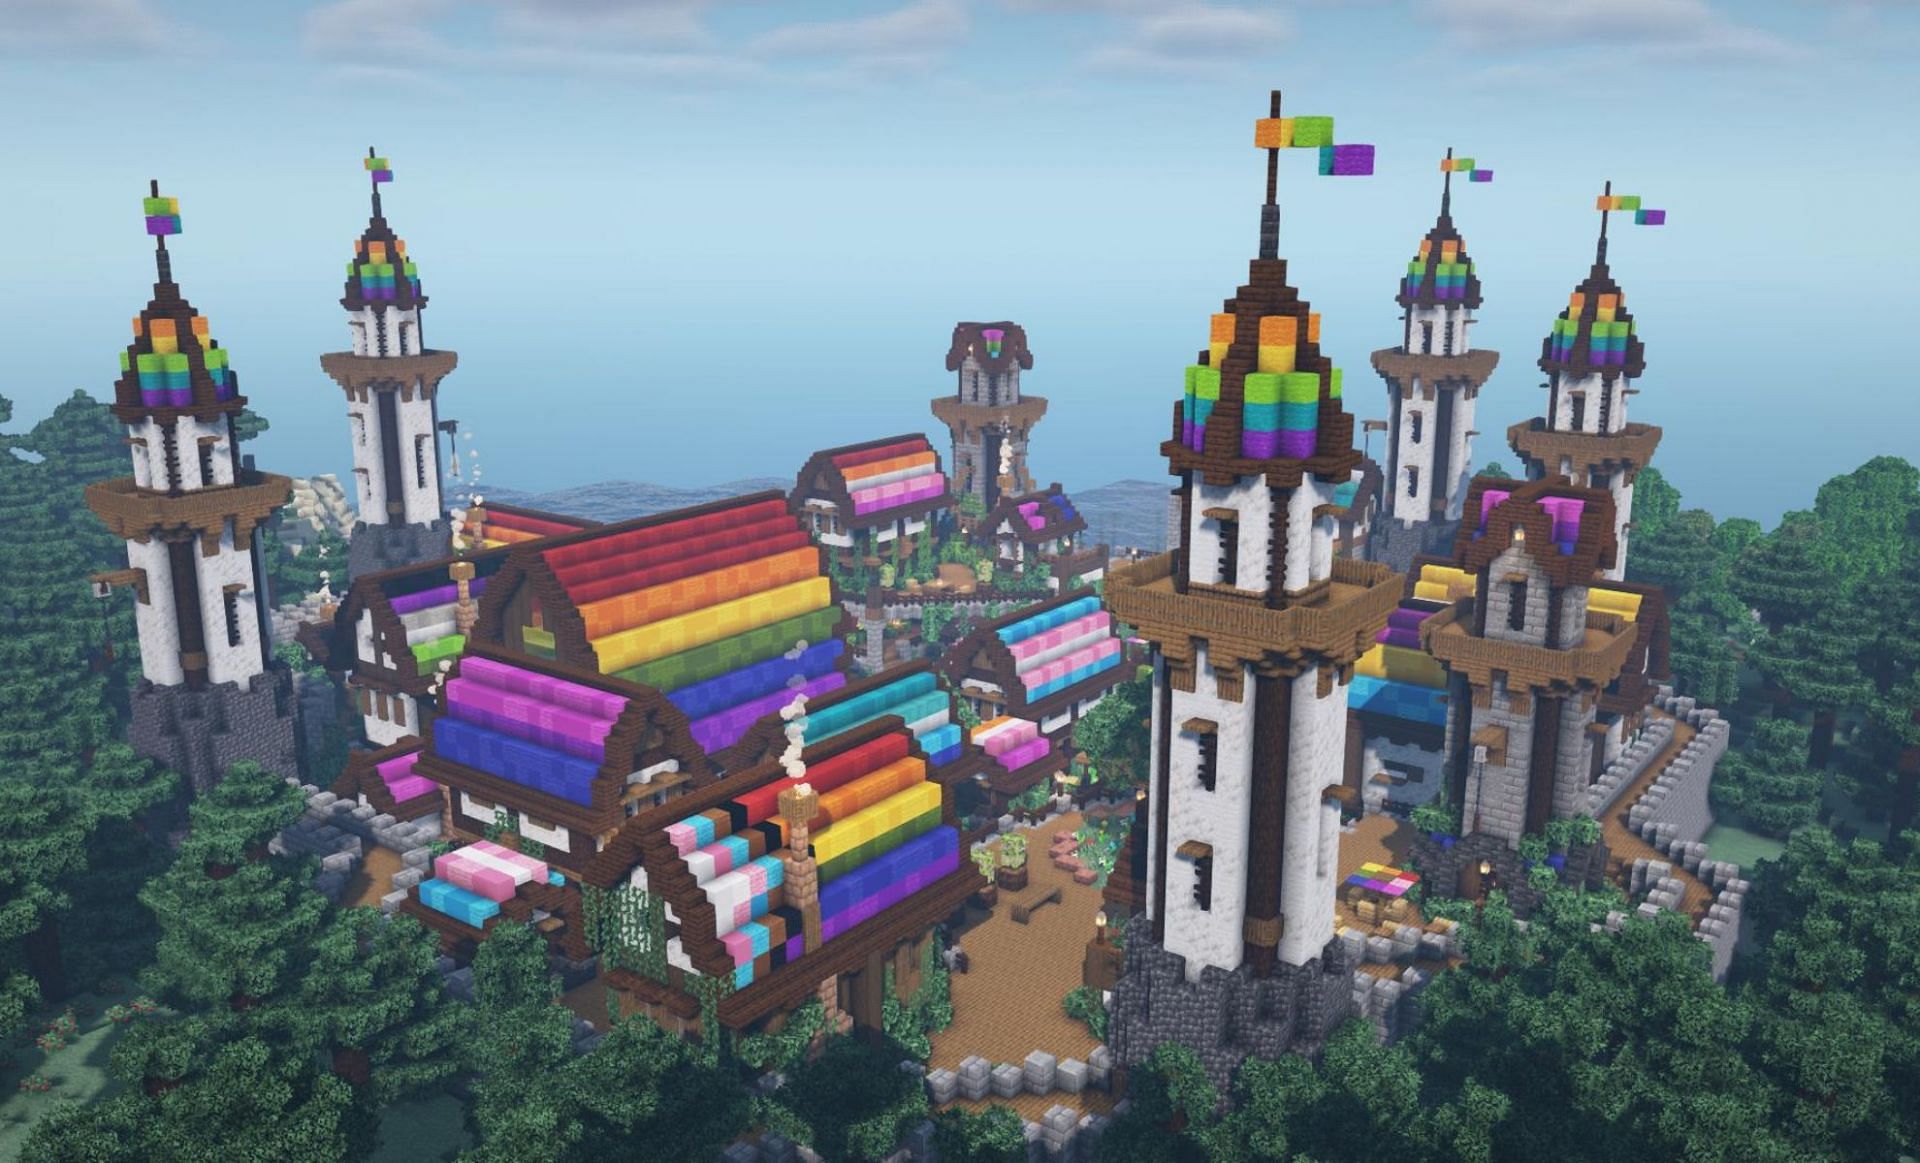 The Pride village (Image via u/Xarrior on Reddit)